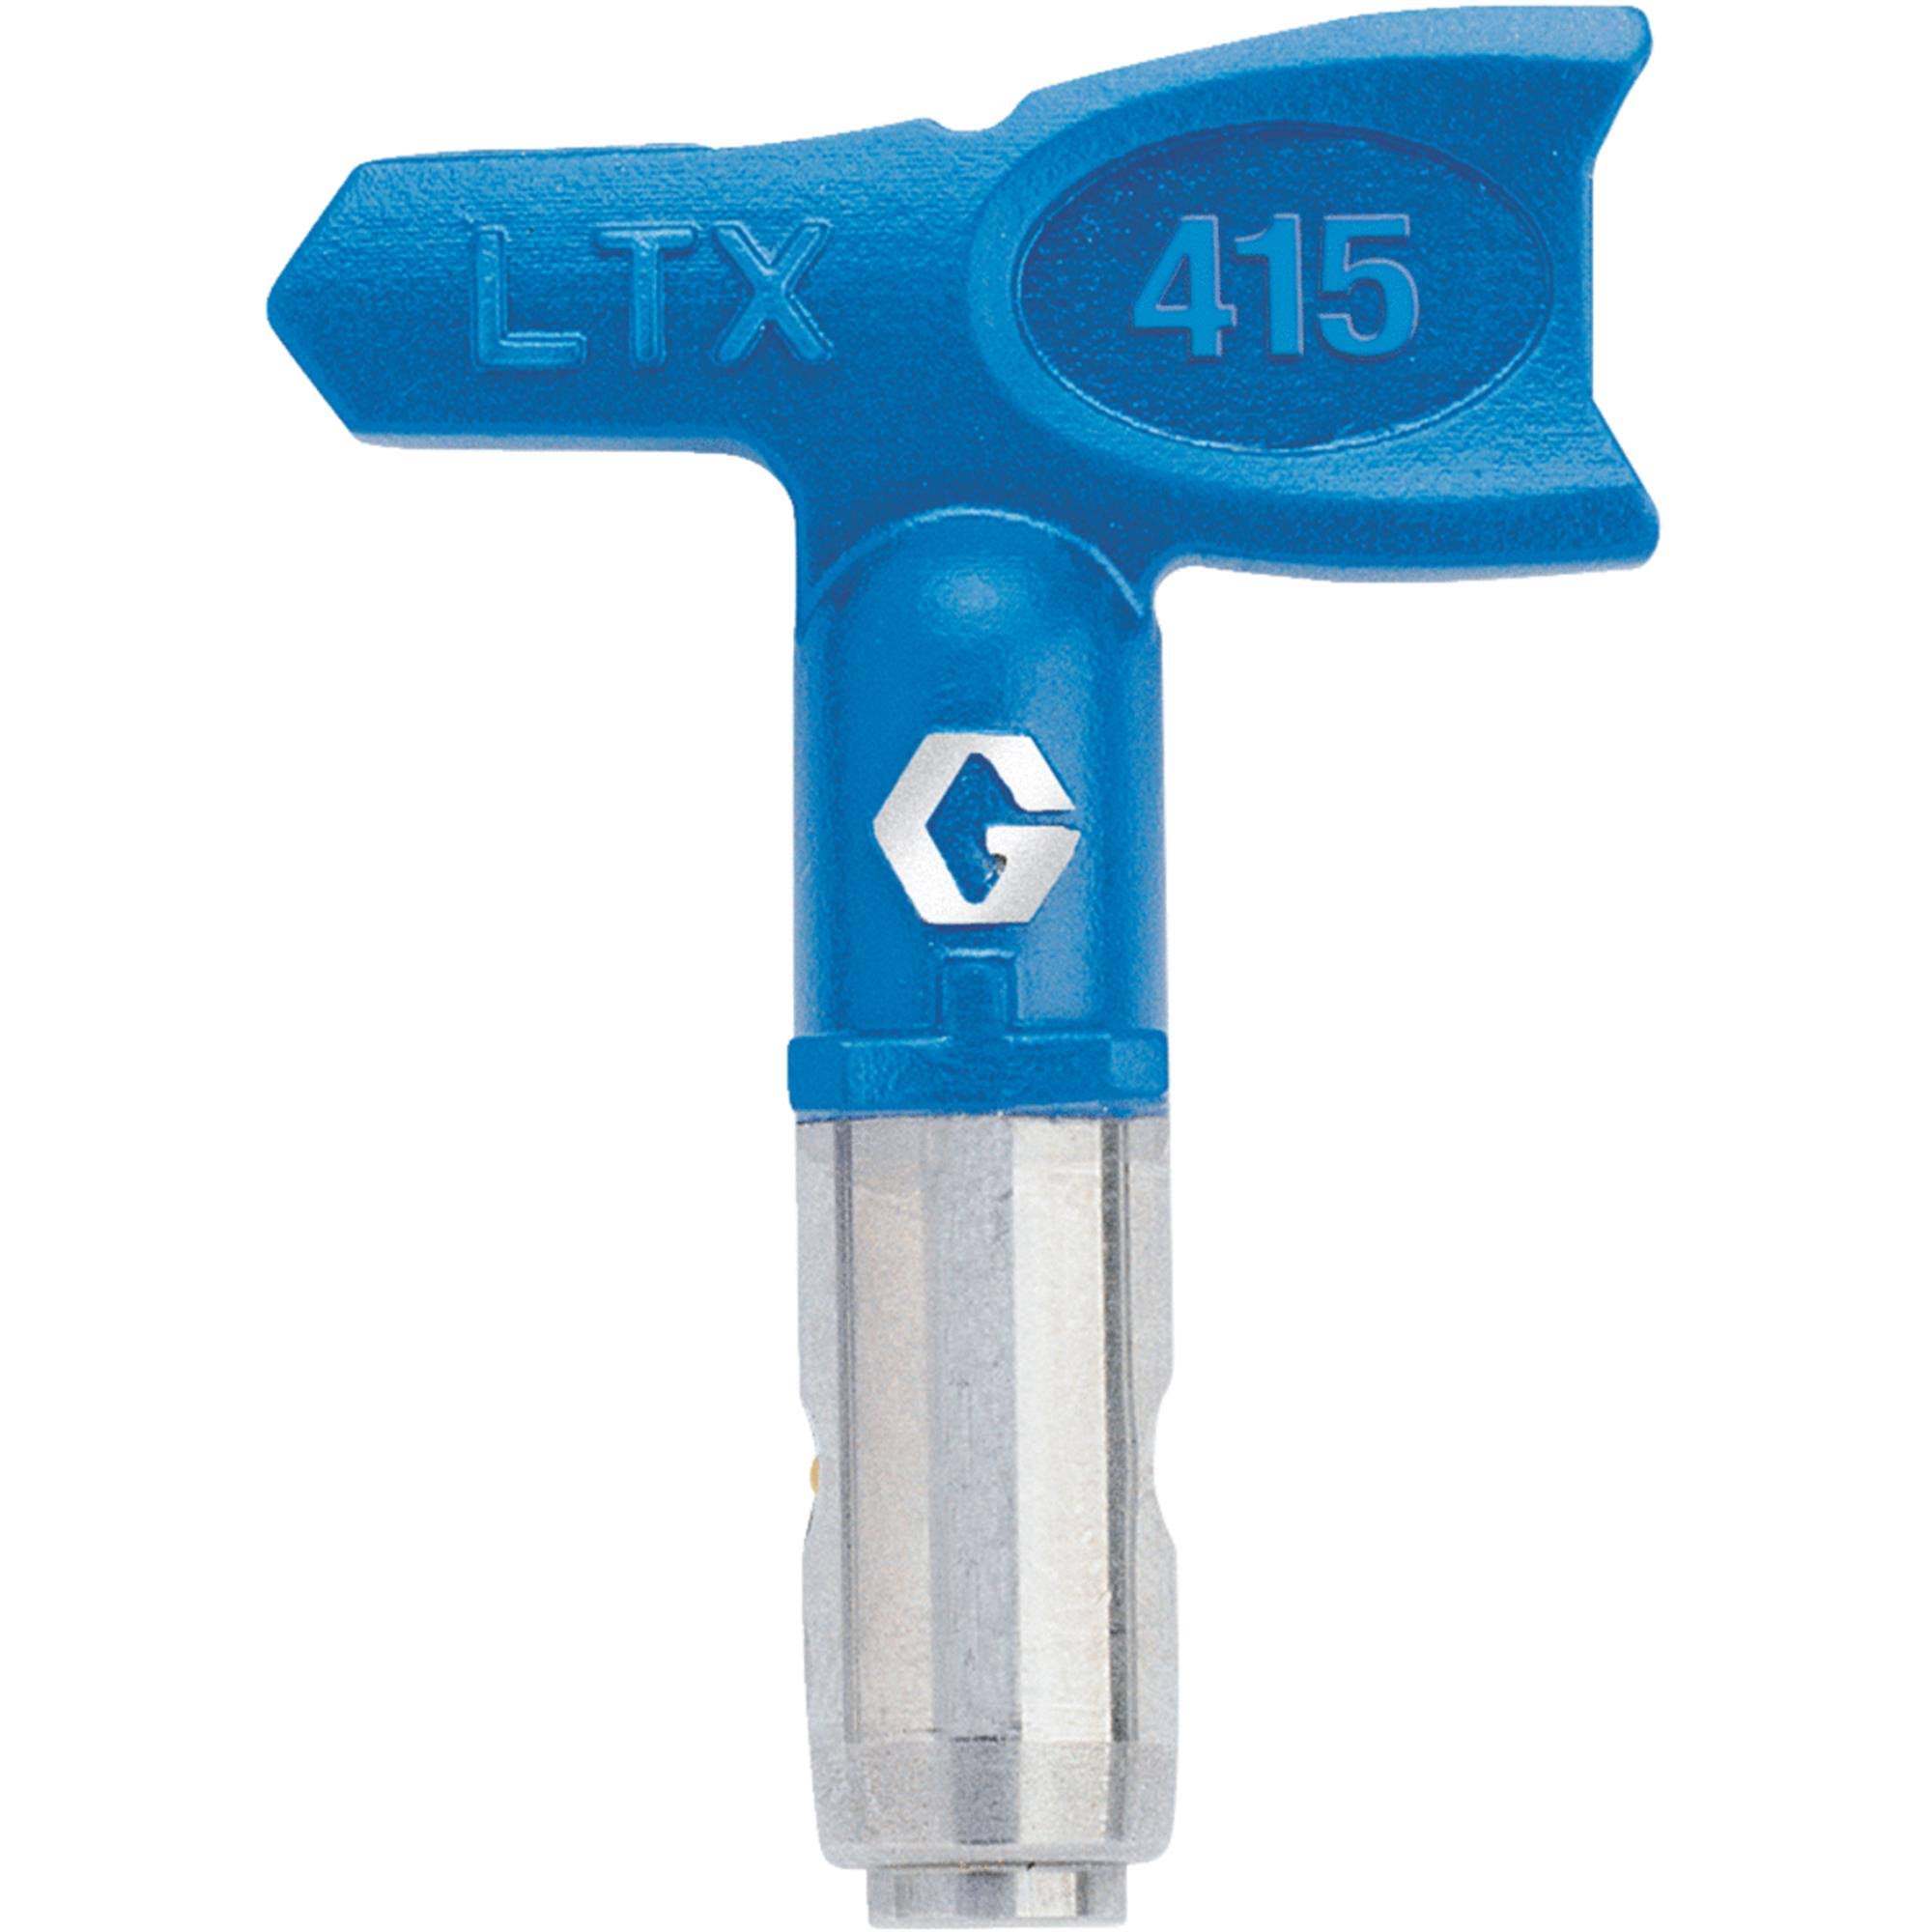 Graco RAC X Reversible Tip for Airless Paint Spray Guns